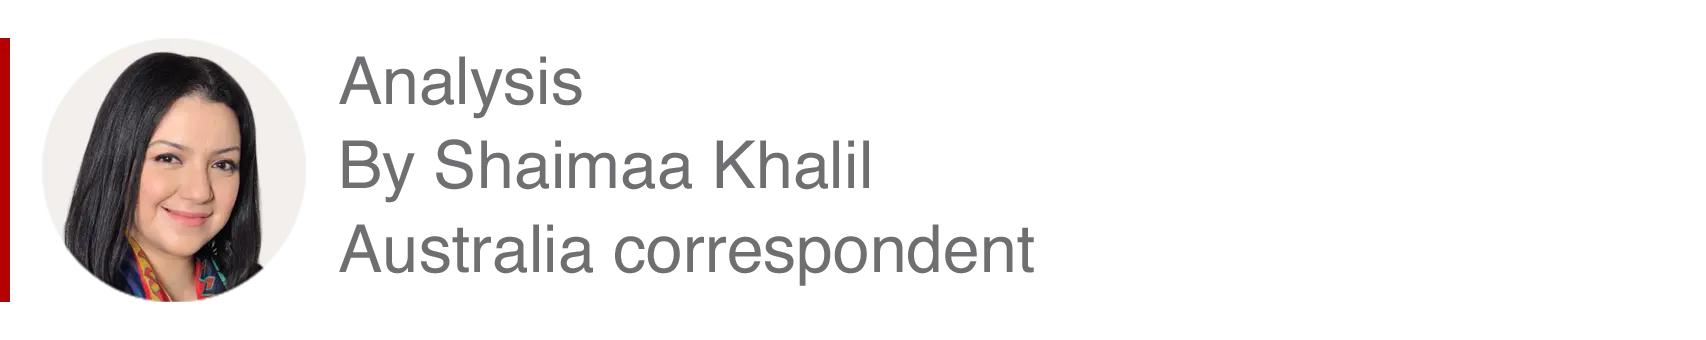 Analysis box by Shaimaa Khalil, Australia correspondent